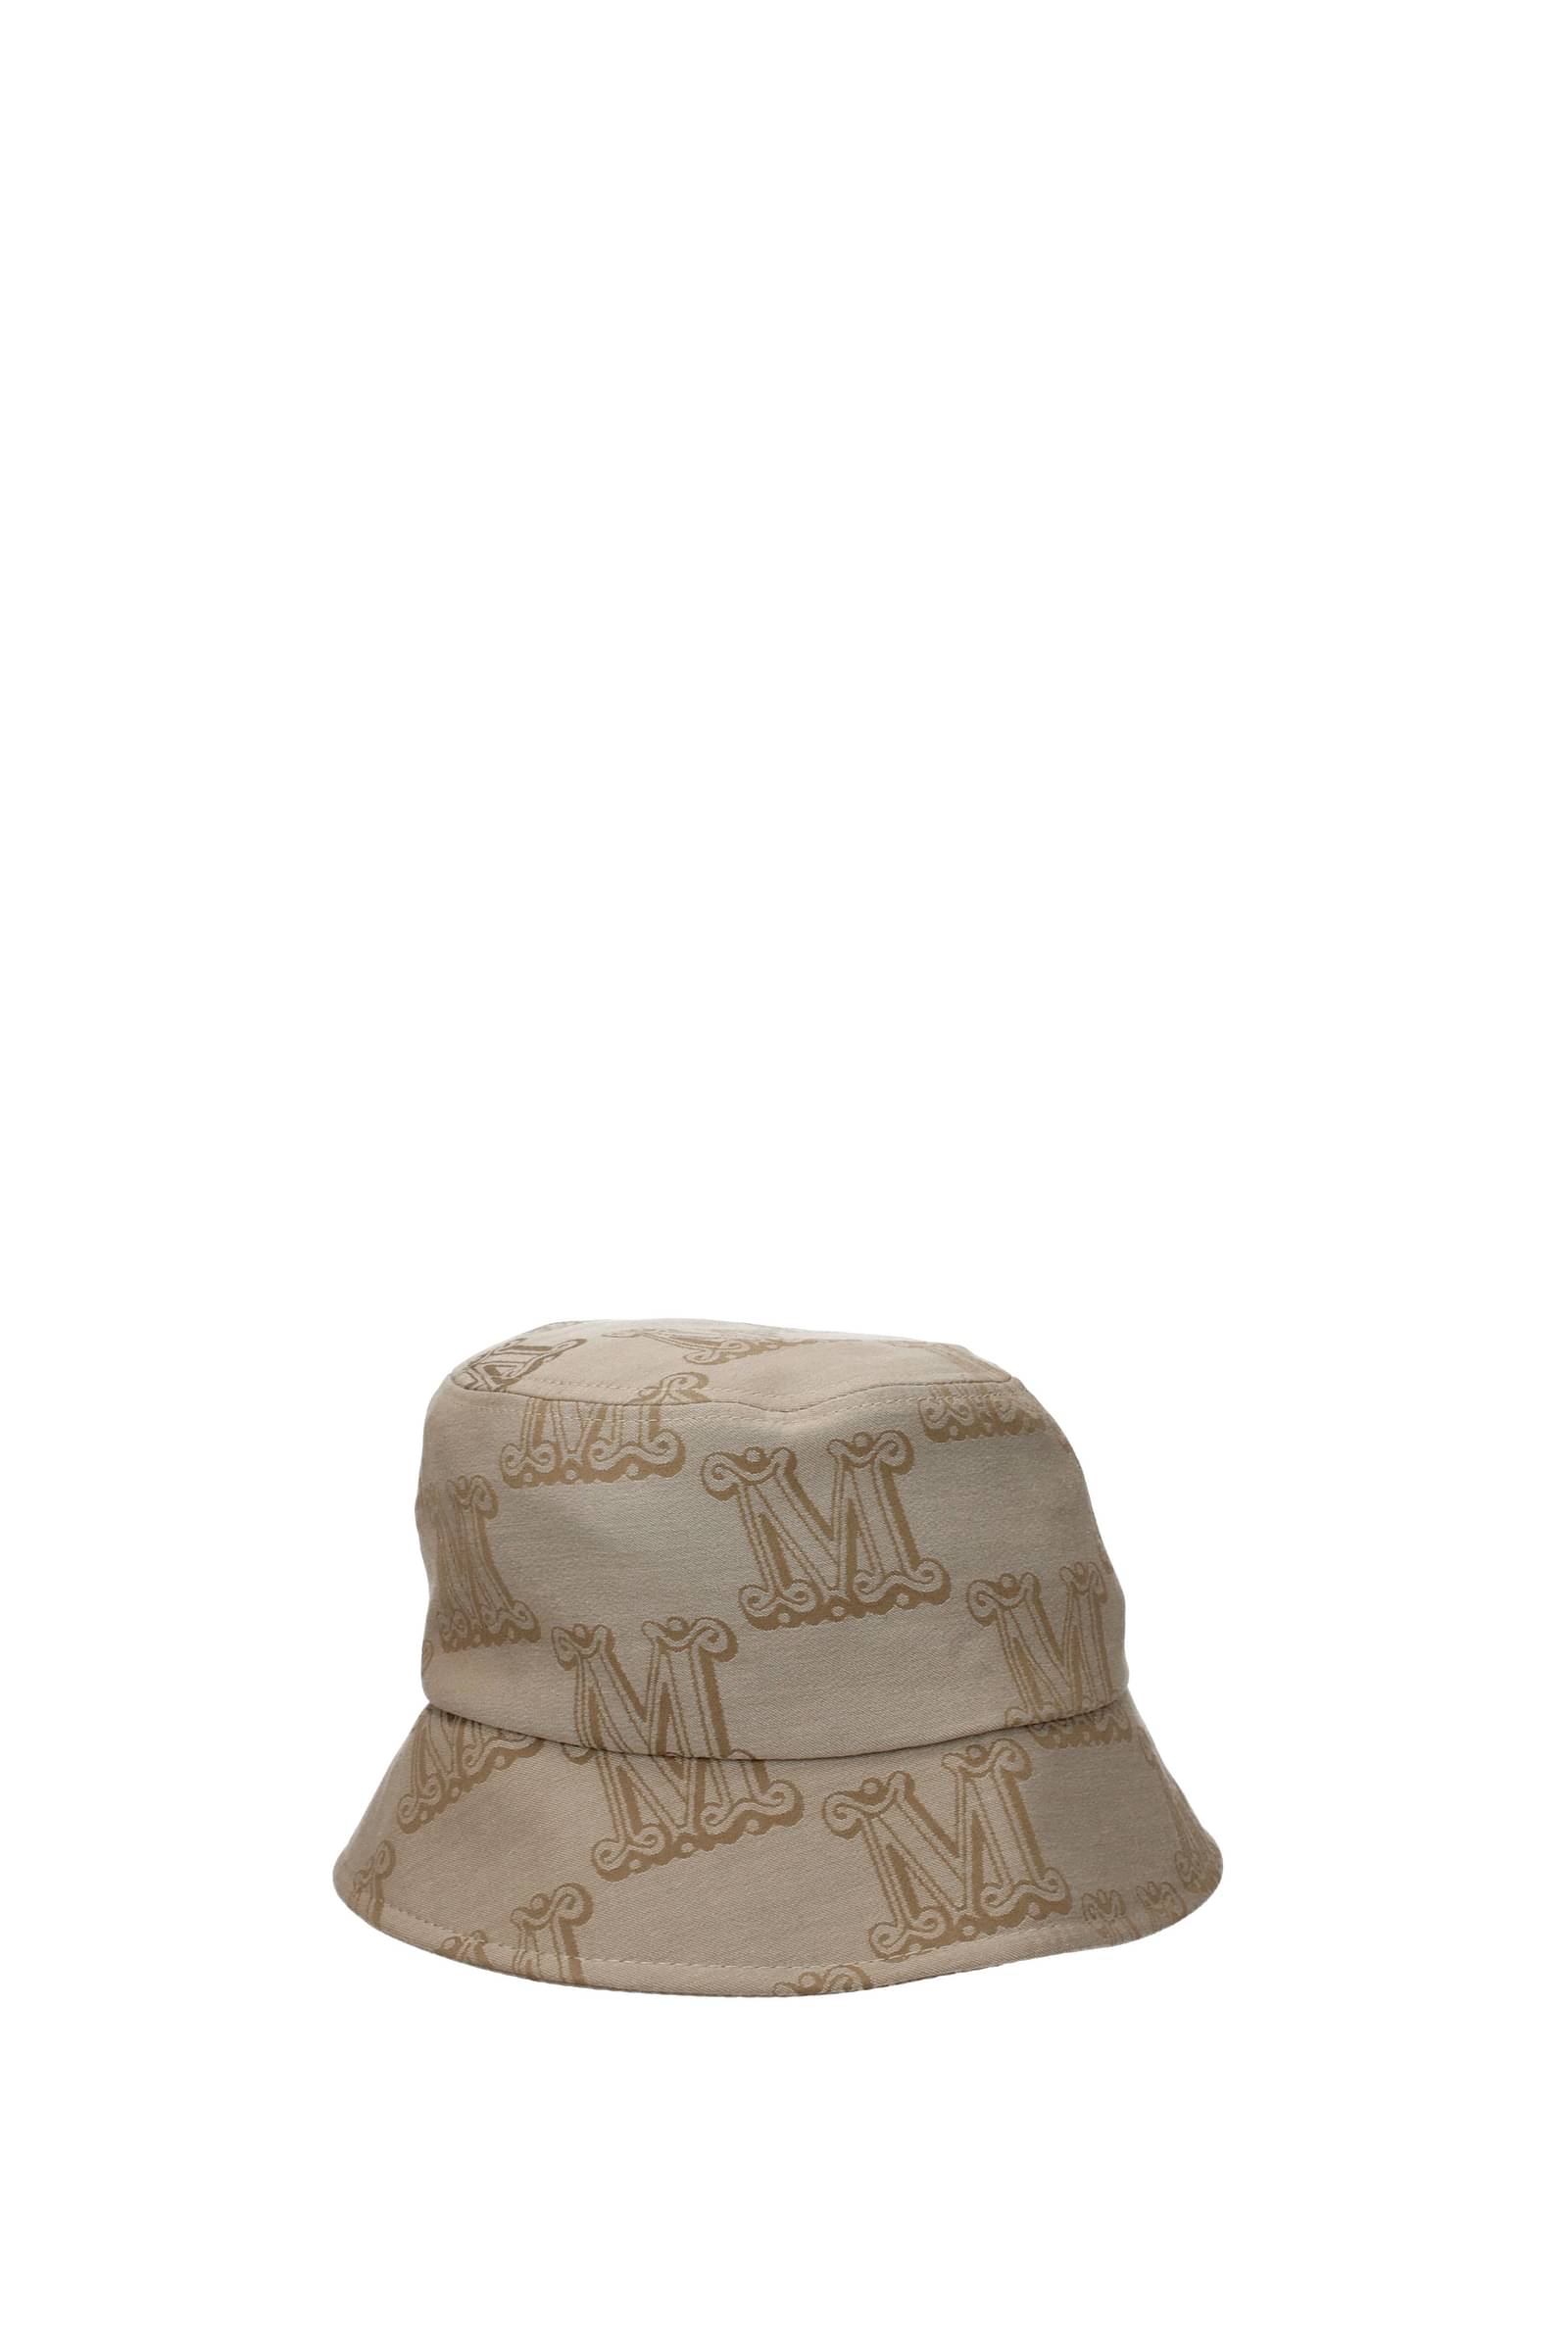 max mara-cappelli brenta cotone beige noce-donna